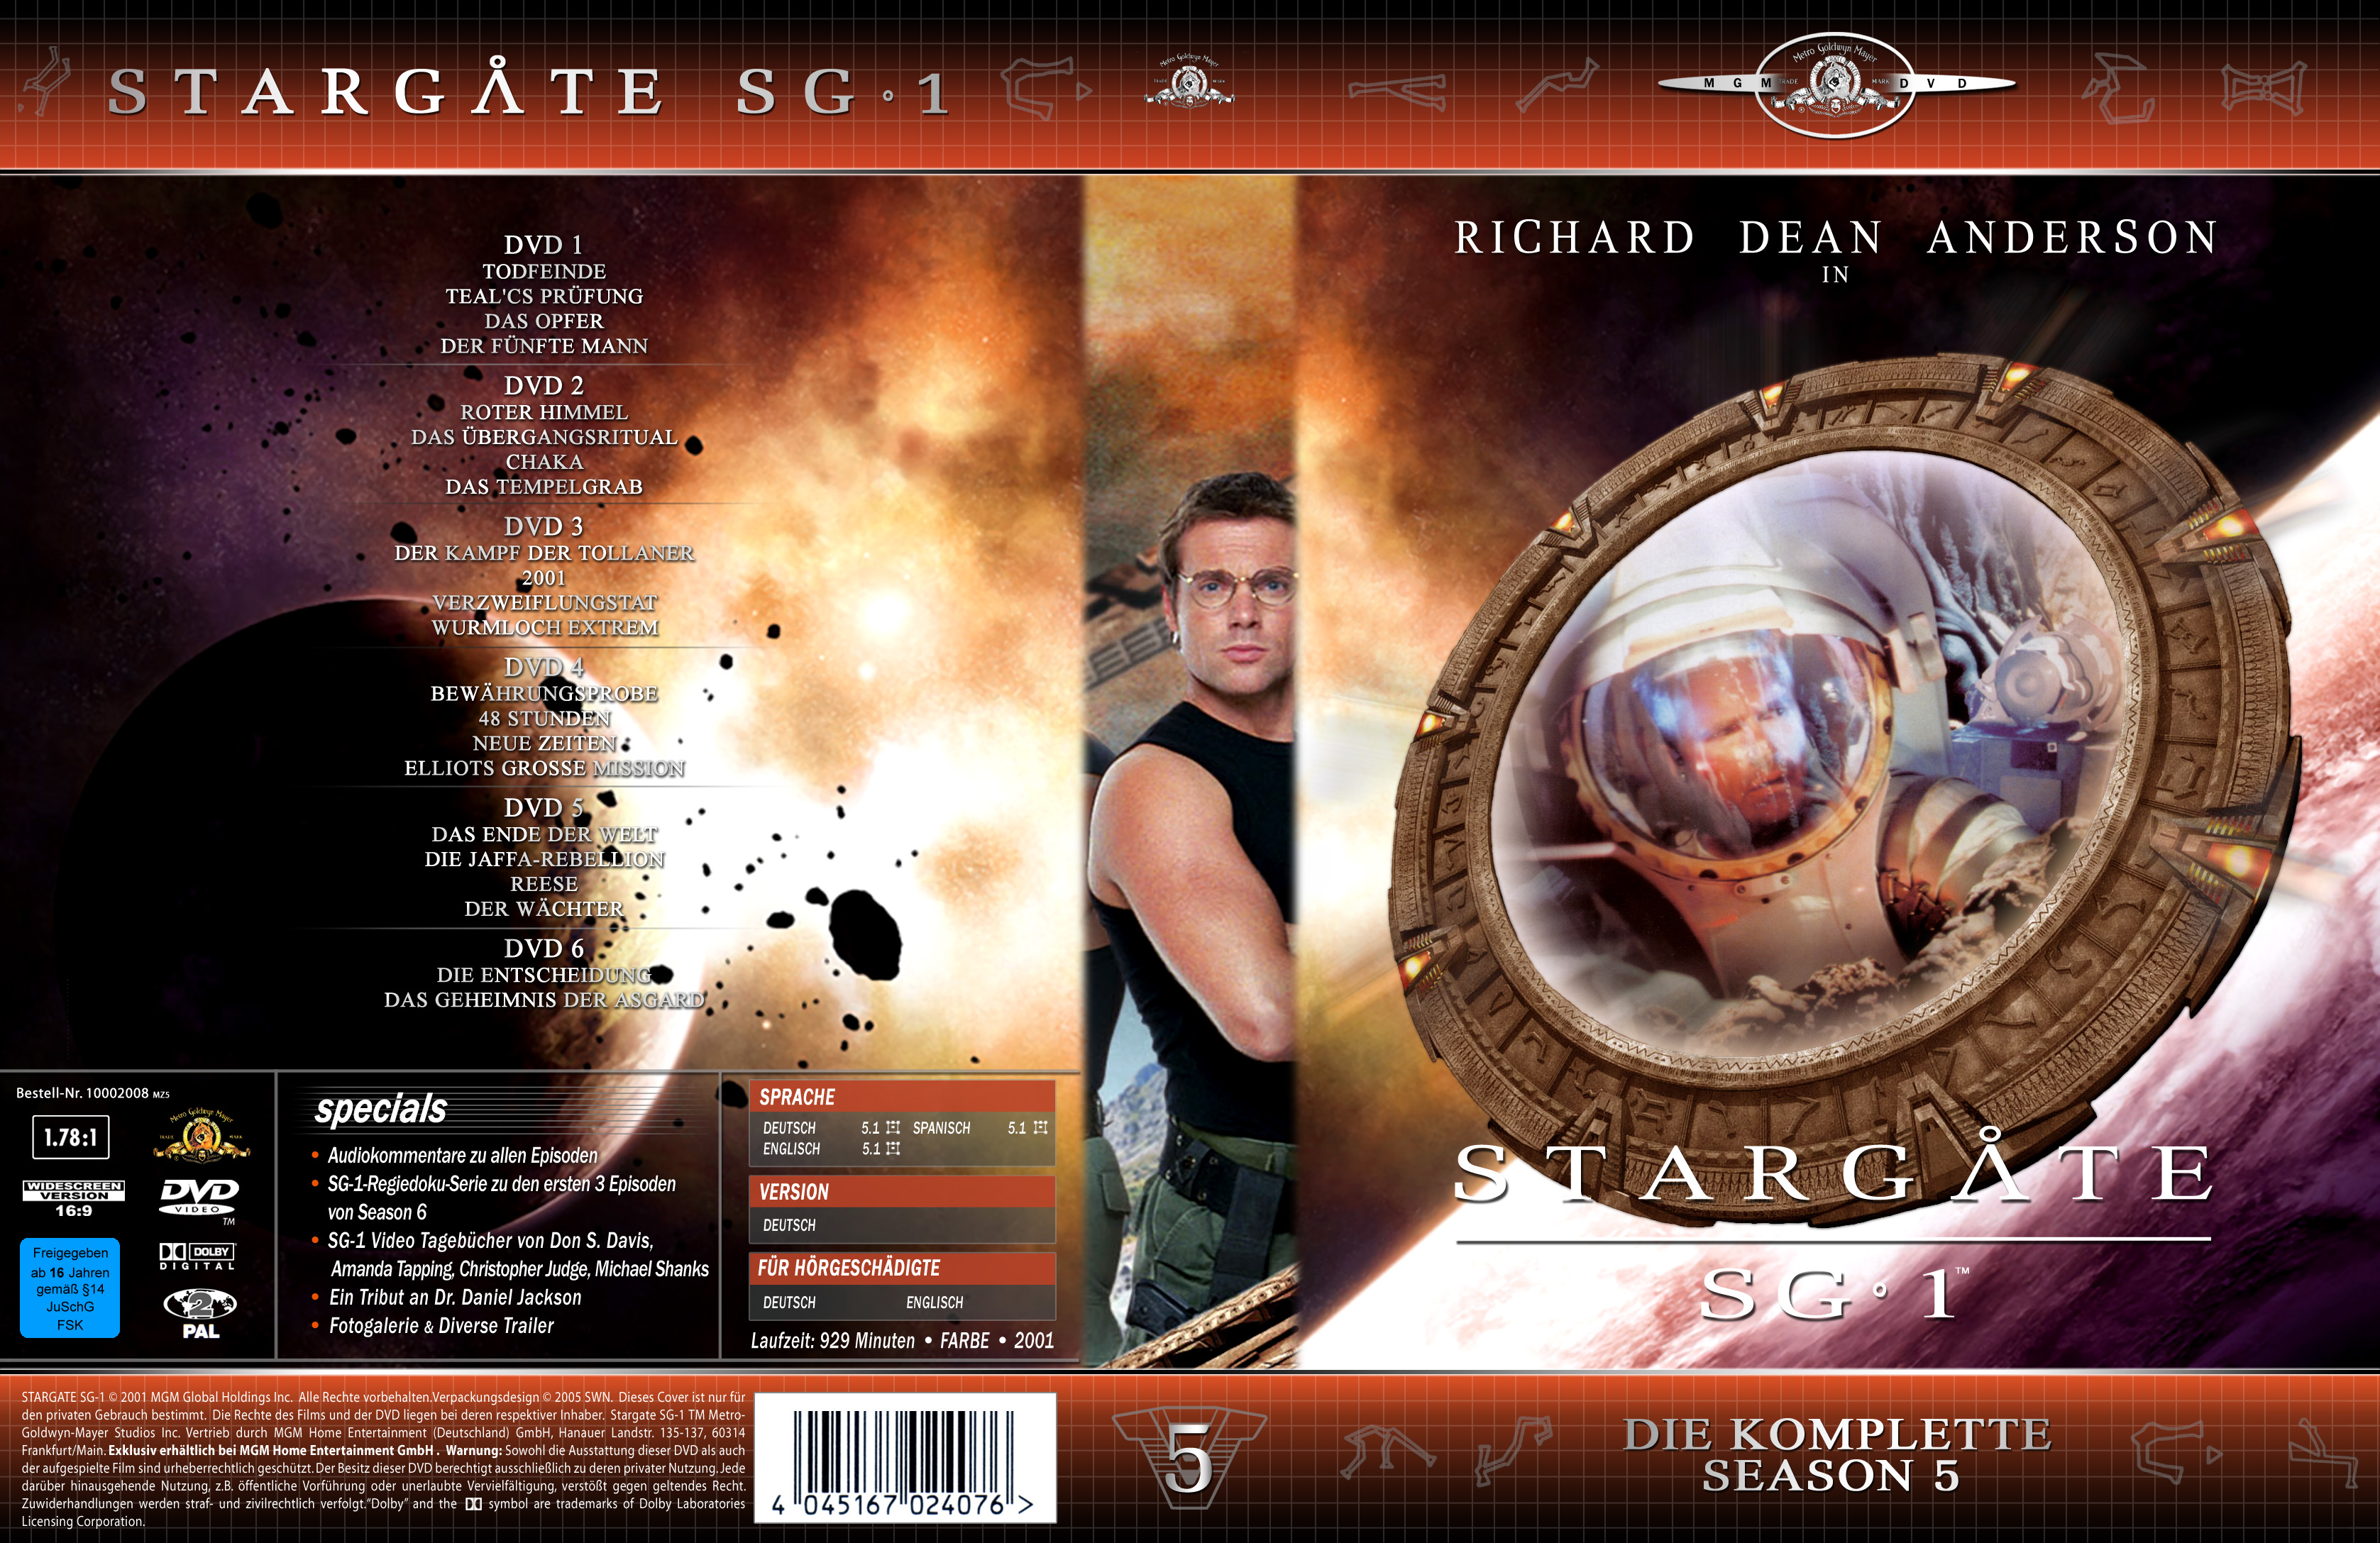 Stargate sg 1 pc game